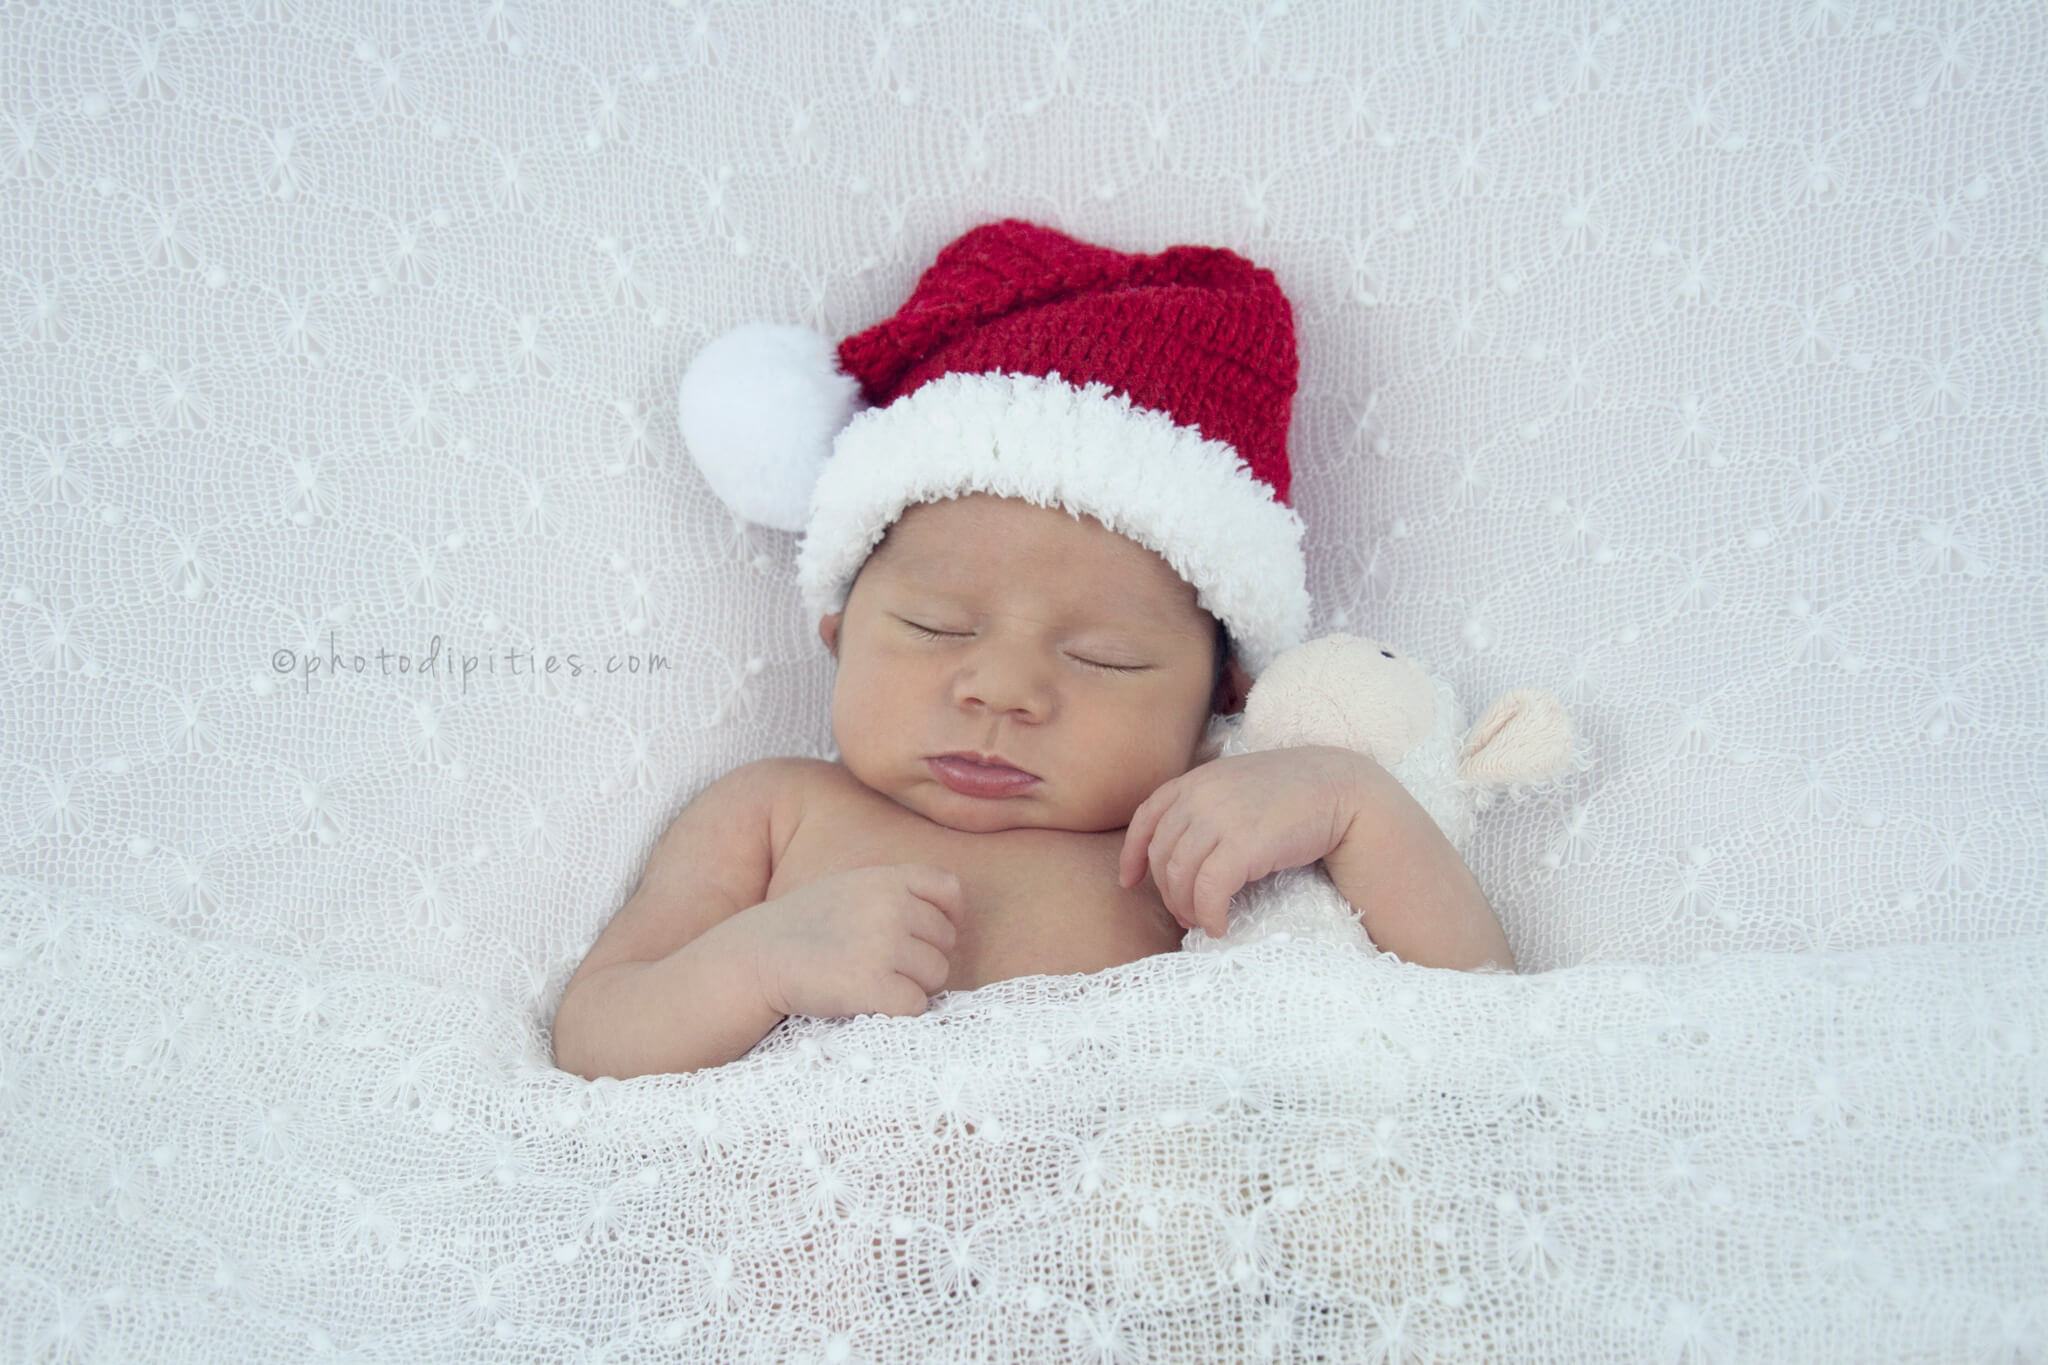 Photodipities Family - Newborn Photography